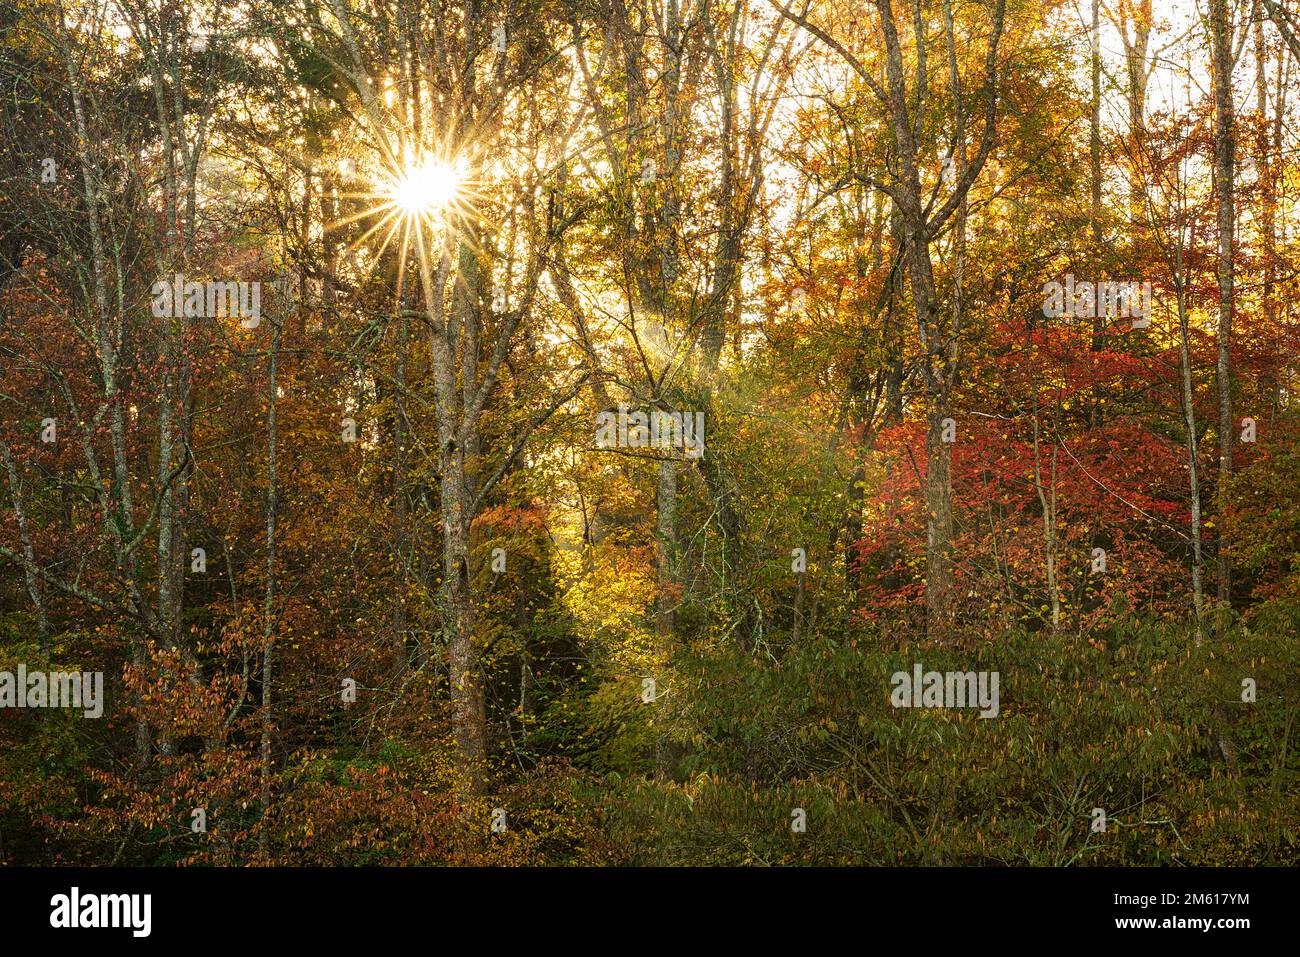 Im Great Smoky Mountain National Park in Townsend, Tennessee, strahlen Sonnenstrahlen durch den Herbstfrost Stockfoto